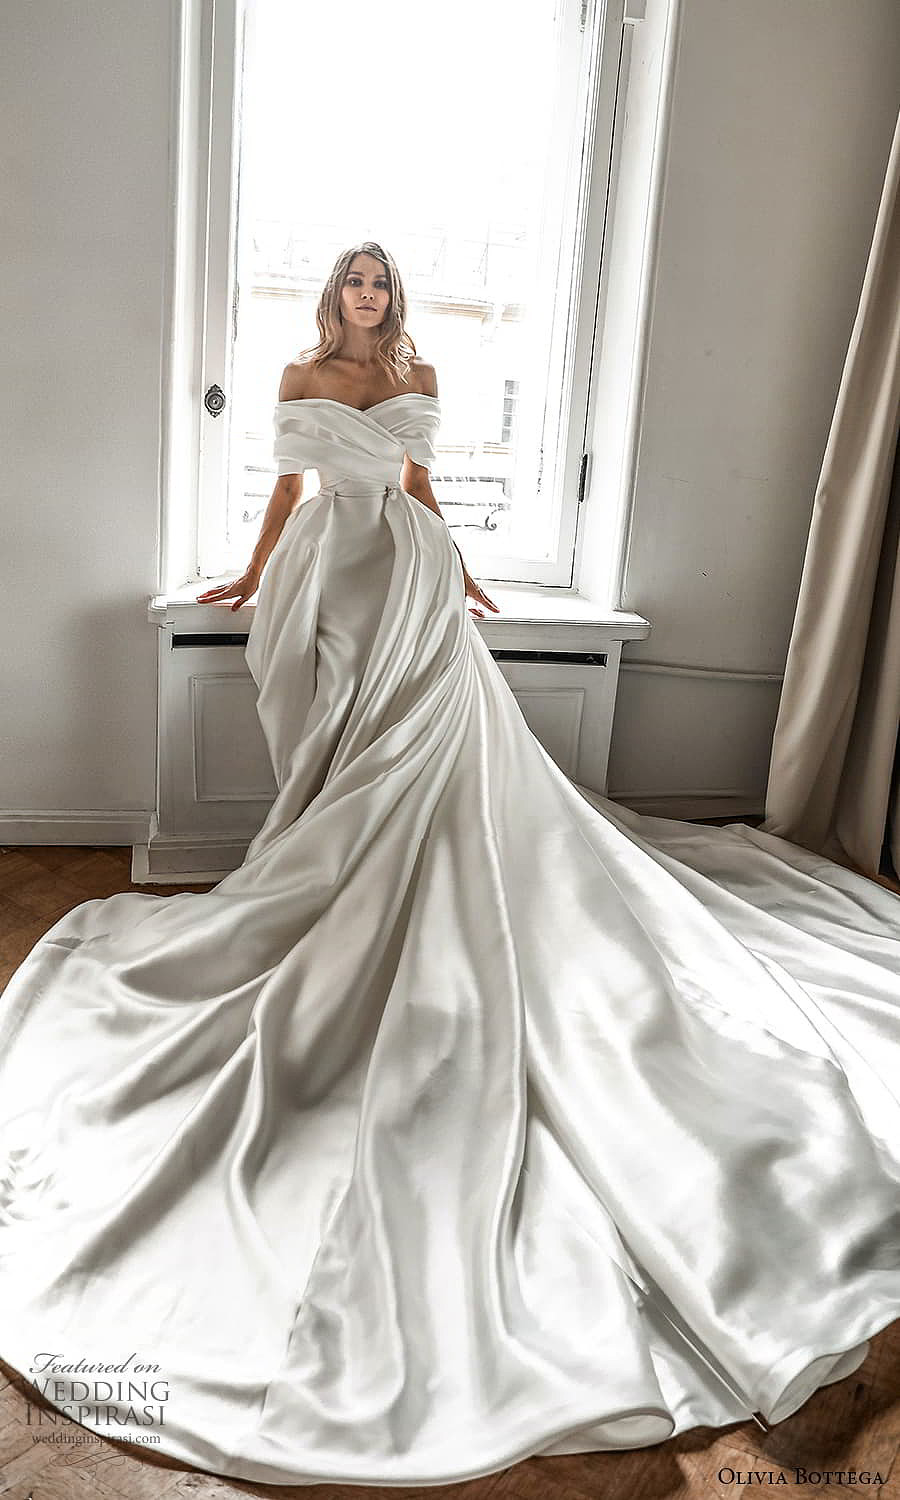 Olivia Bottega Pret-a-Porter 新娘系列 优雅百搭新娘嫁衣 - 30